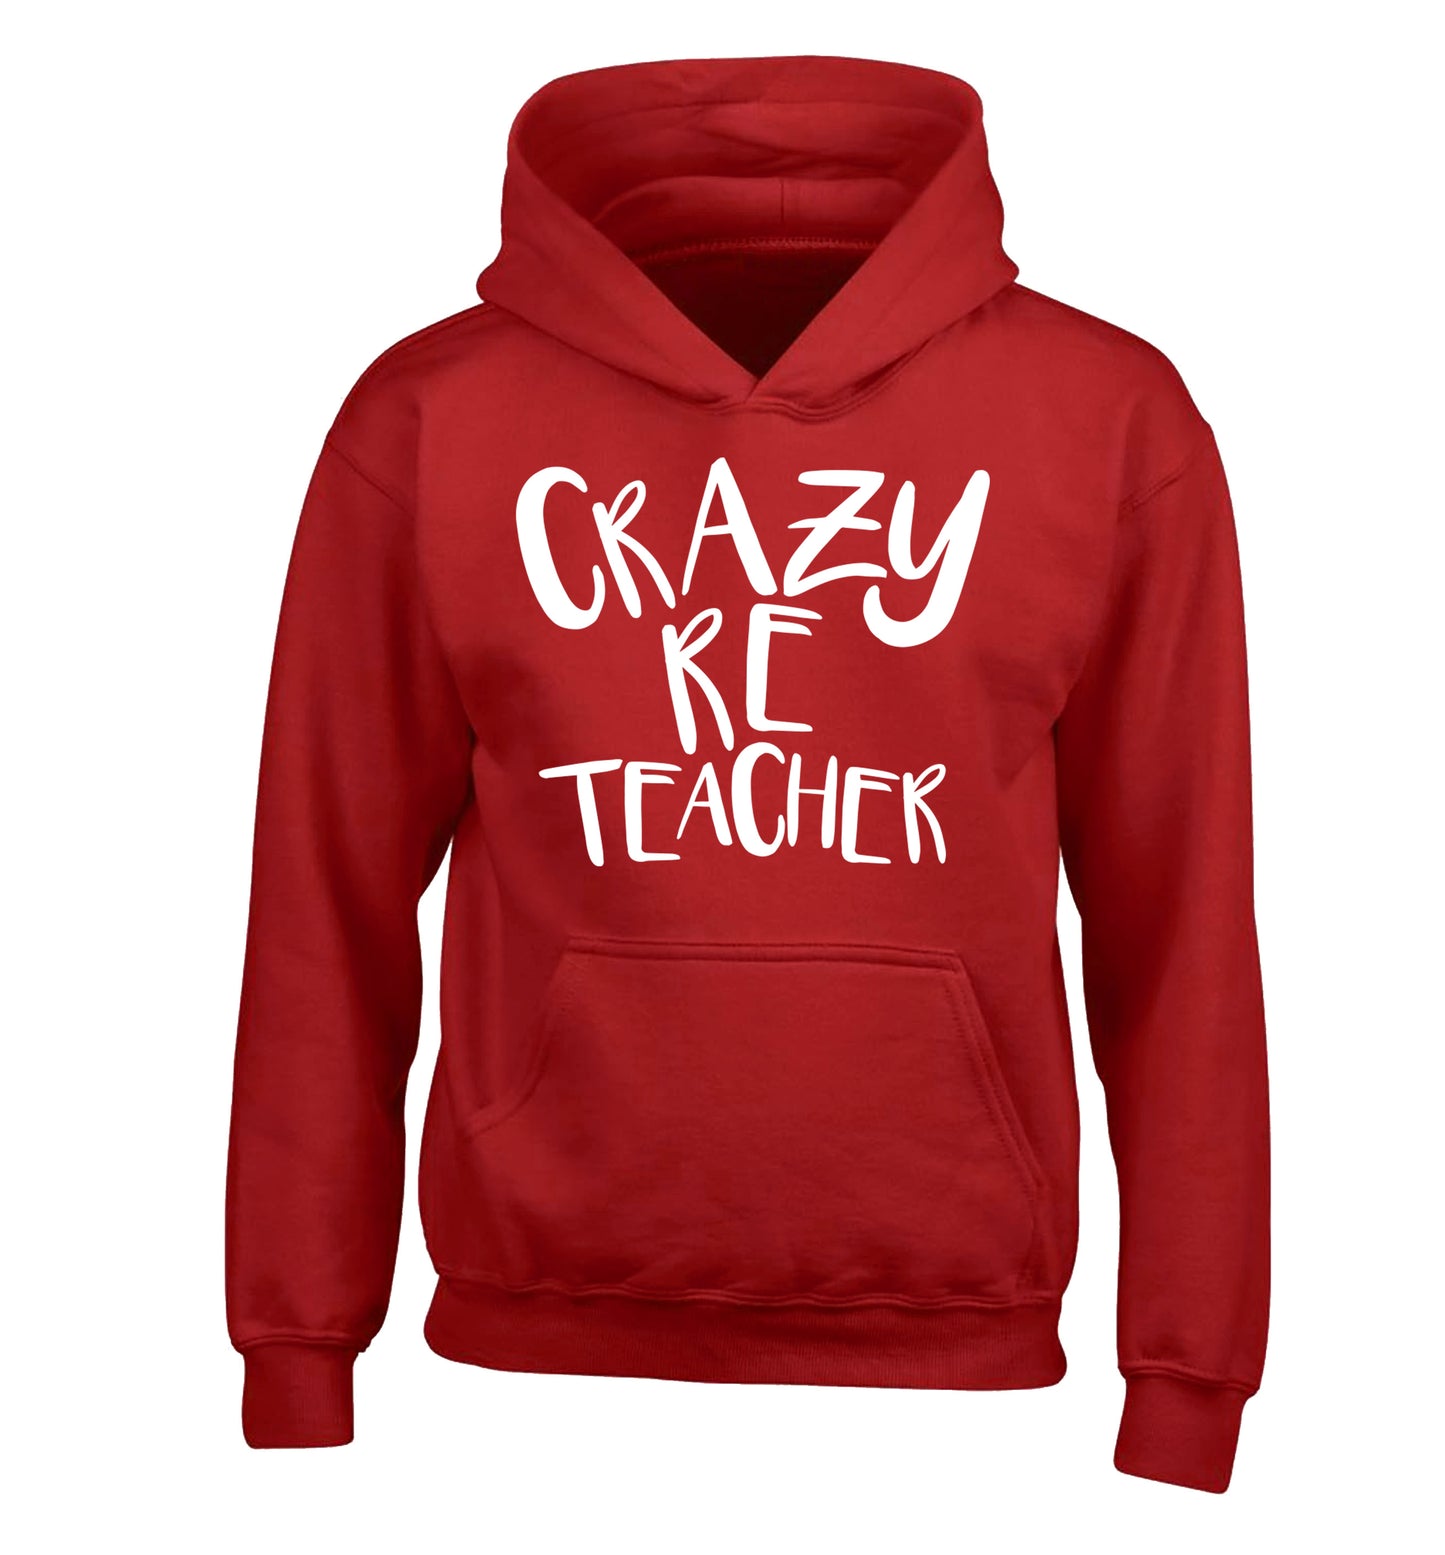 Crazy RE teacher children's red hoodie 12-13 Years